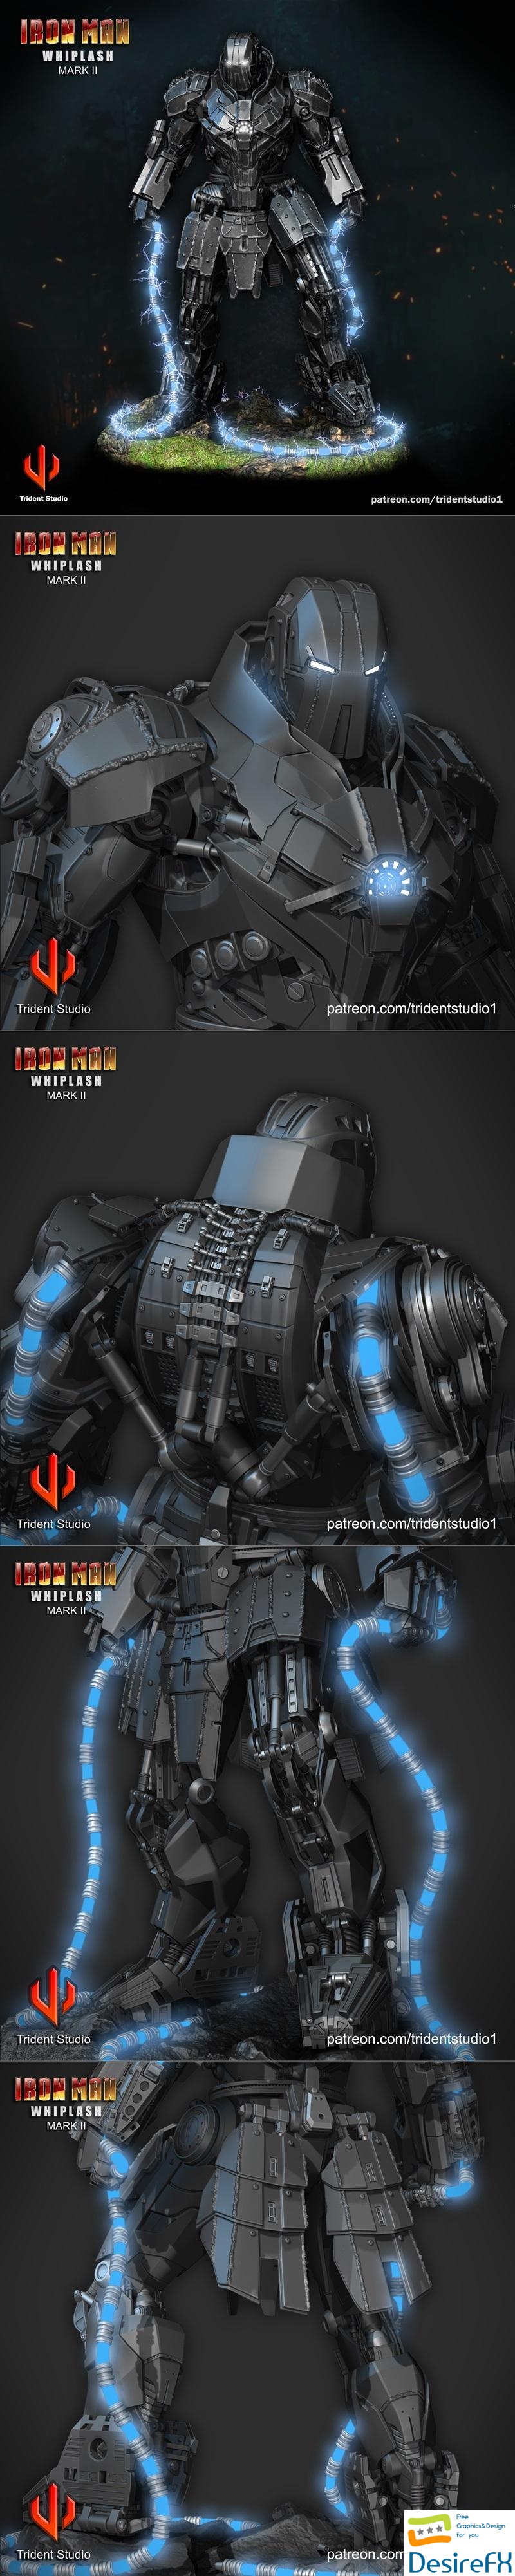 Trident Studio - Iron Man Whiplash MK2 3D Print